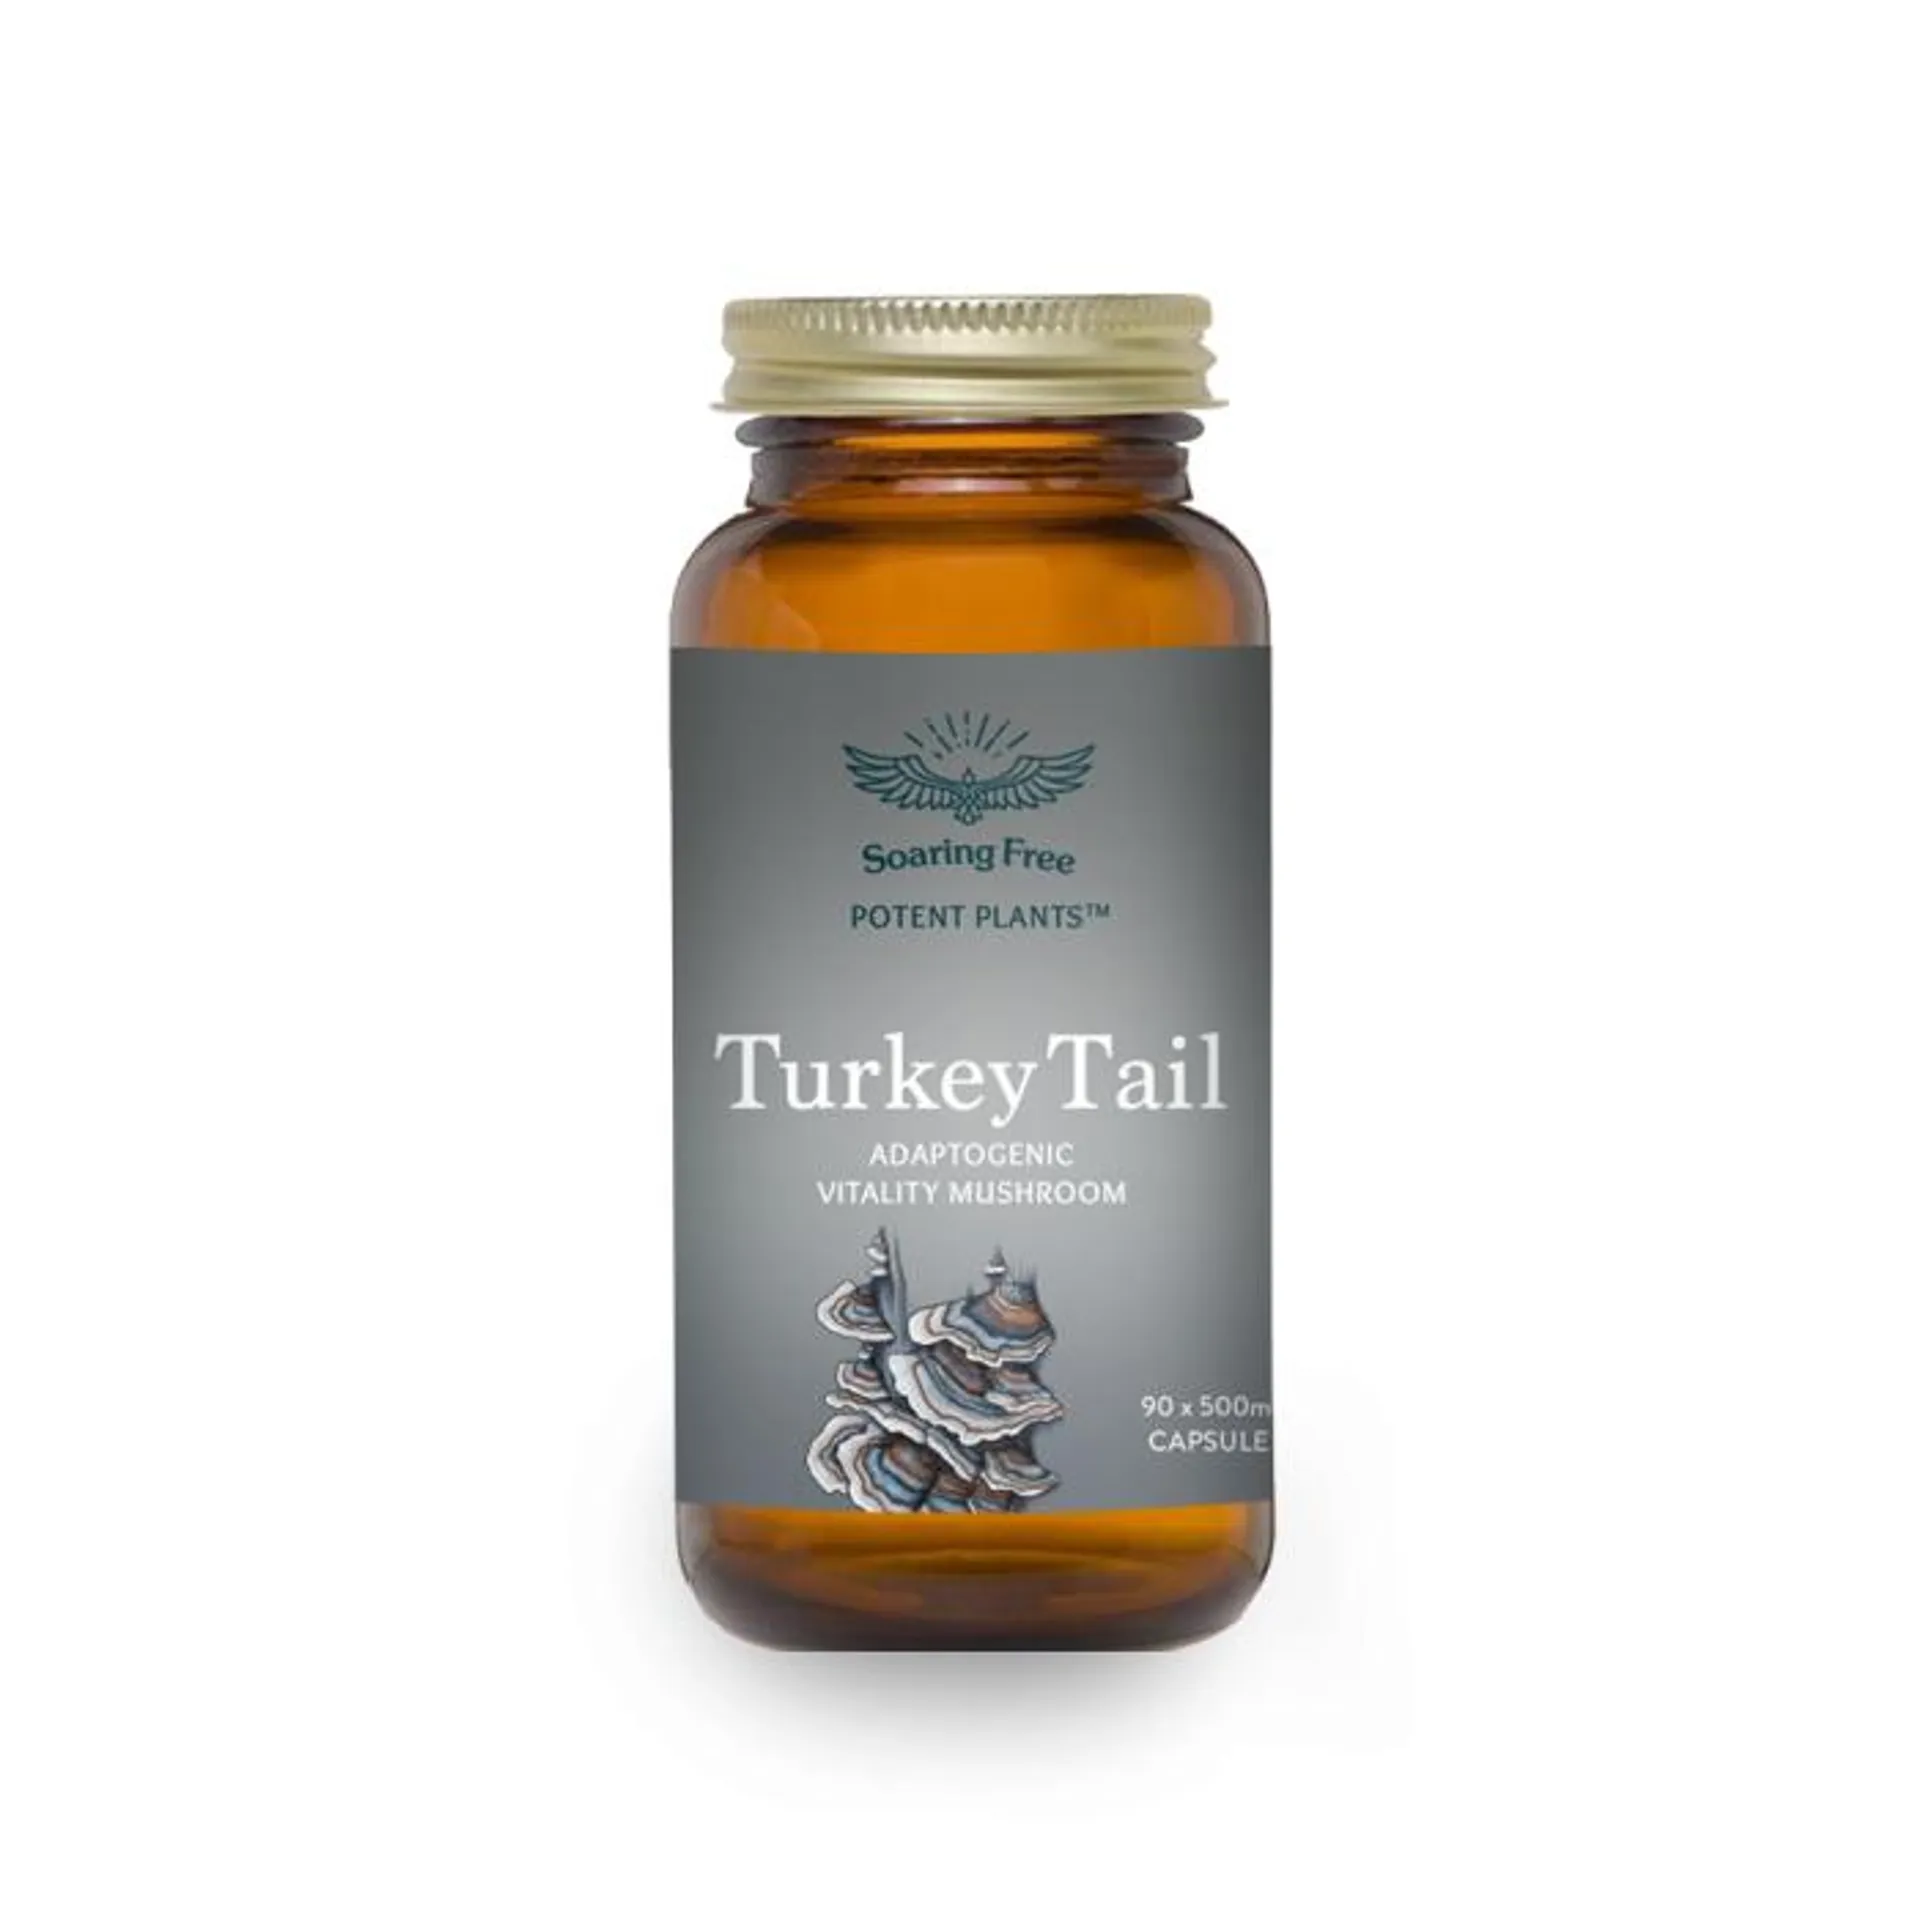 Soaring Free – Potent Plants Turkey Tail 90s